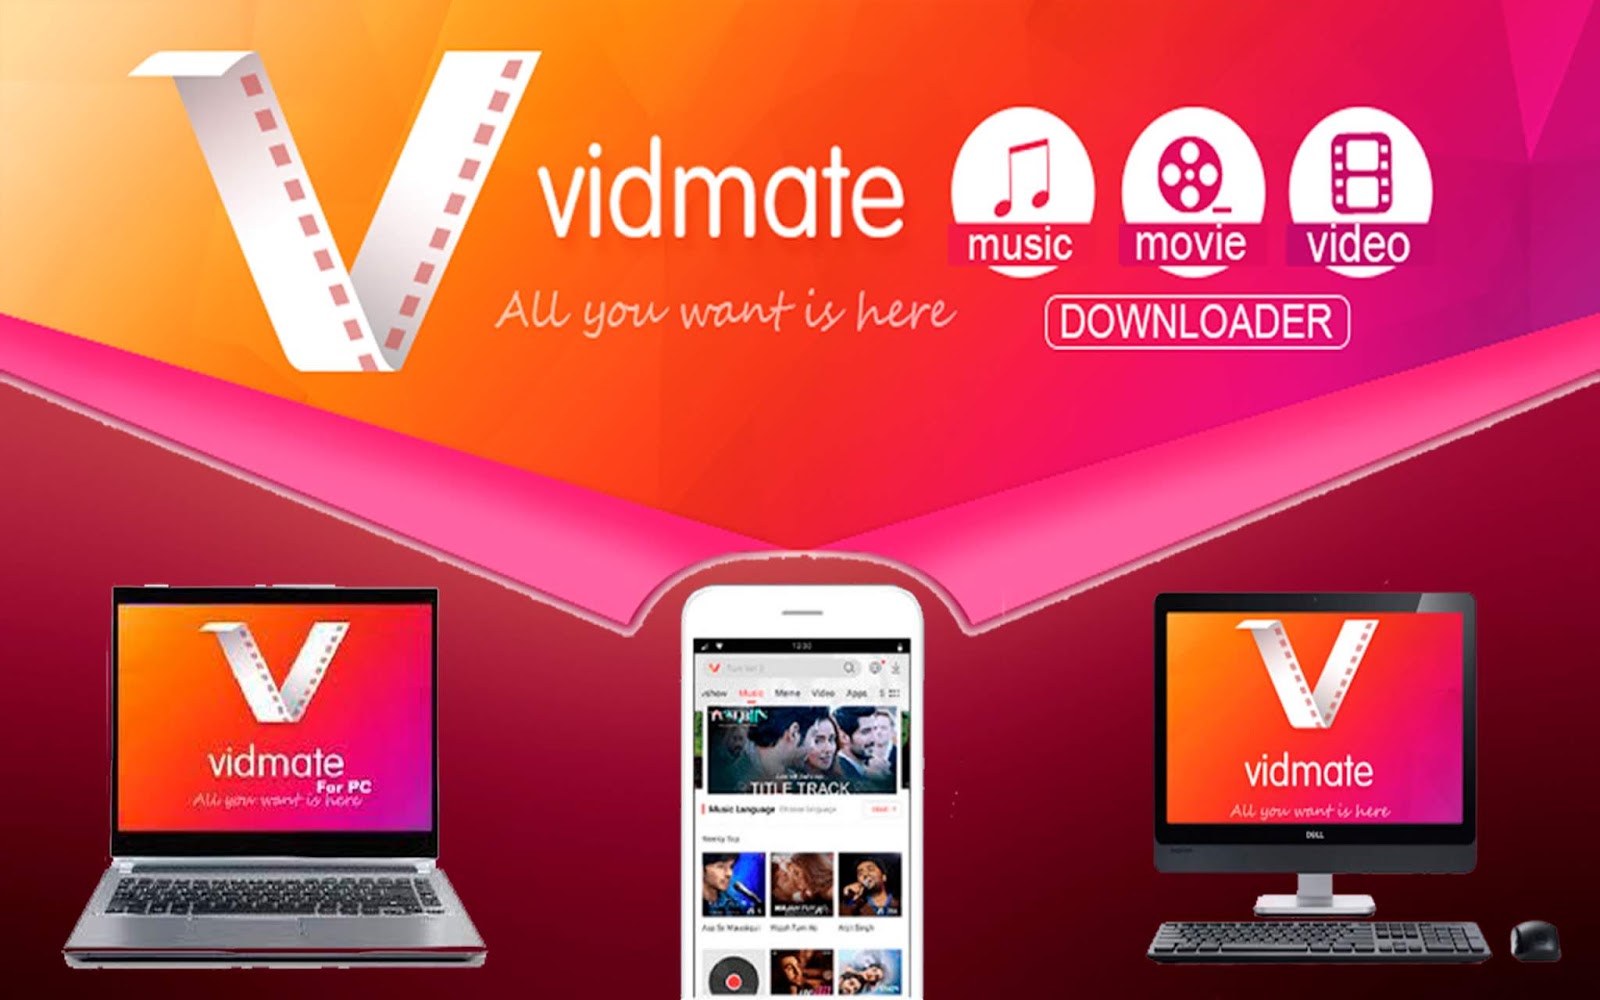 Vidmate Famous Multimedia Content Downloading App For PC